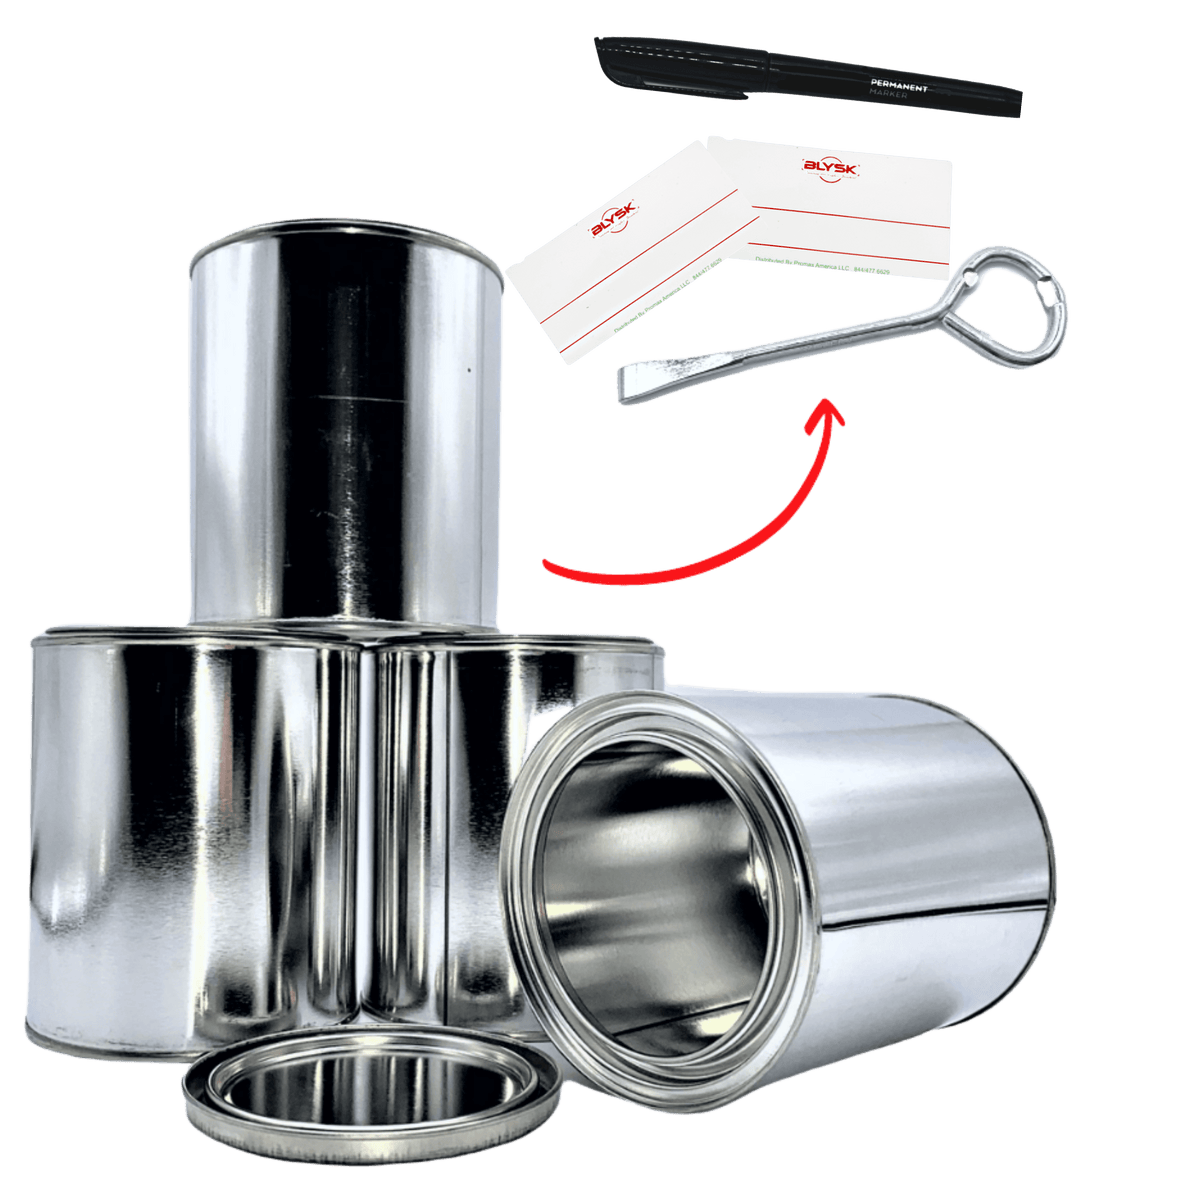 Blysk Empty Metal Copper Primer coted Quart Cans with lids, Craft Stor